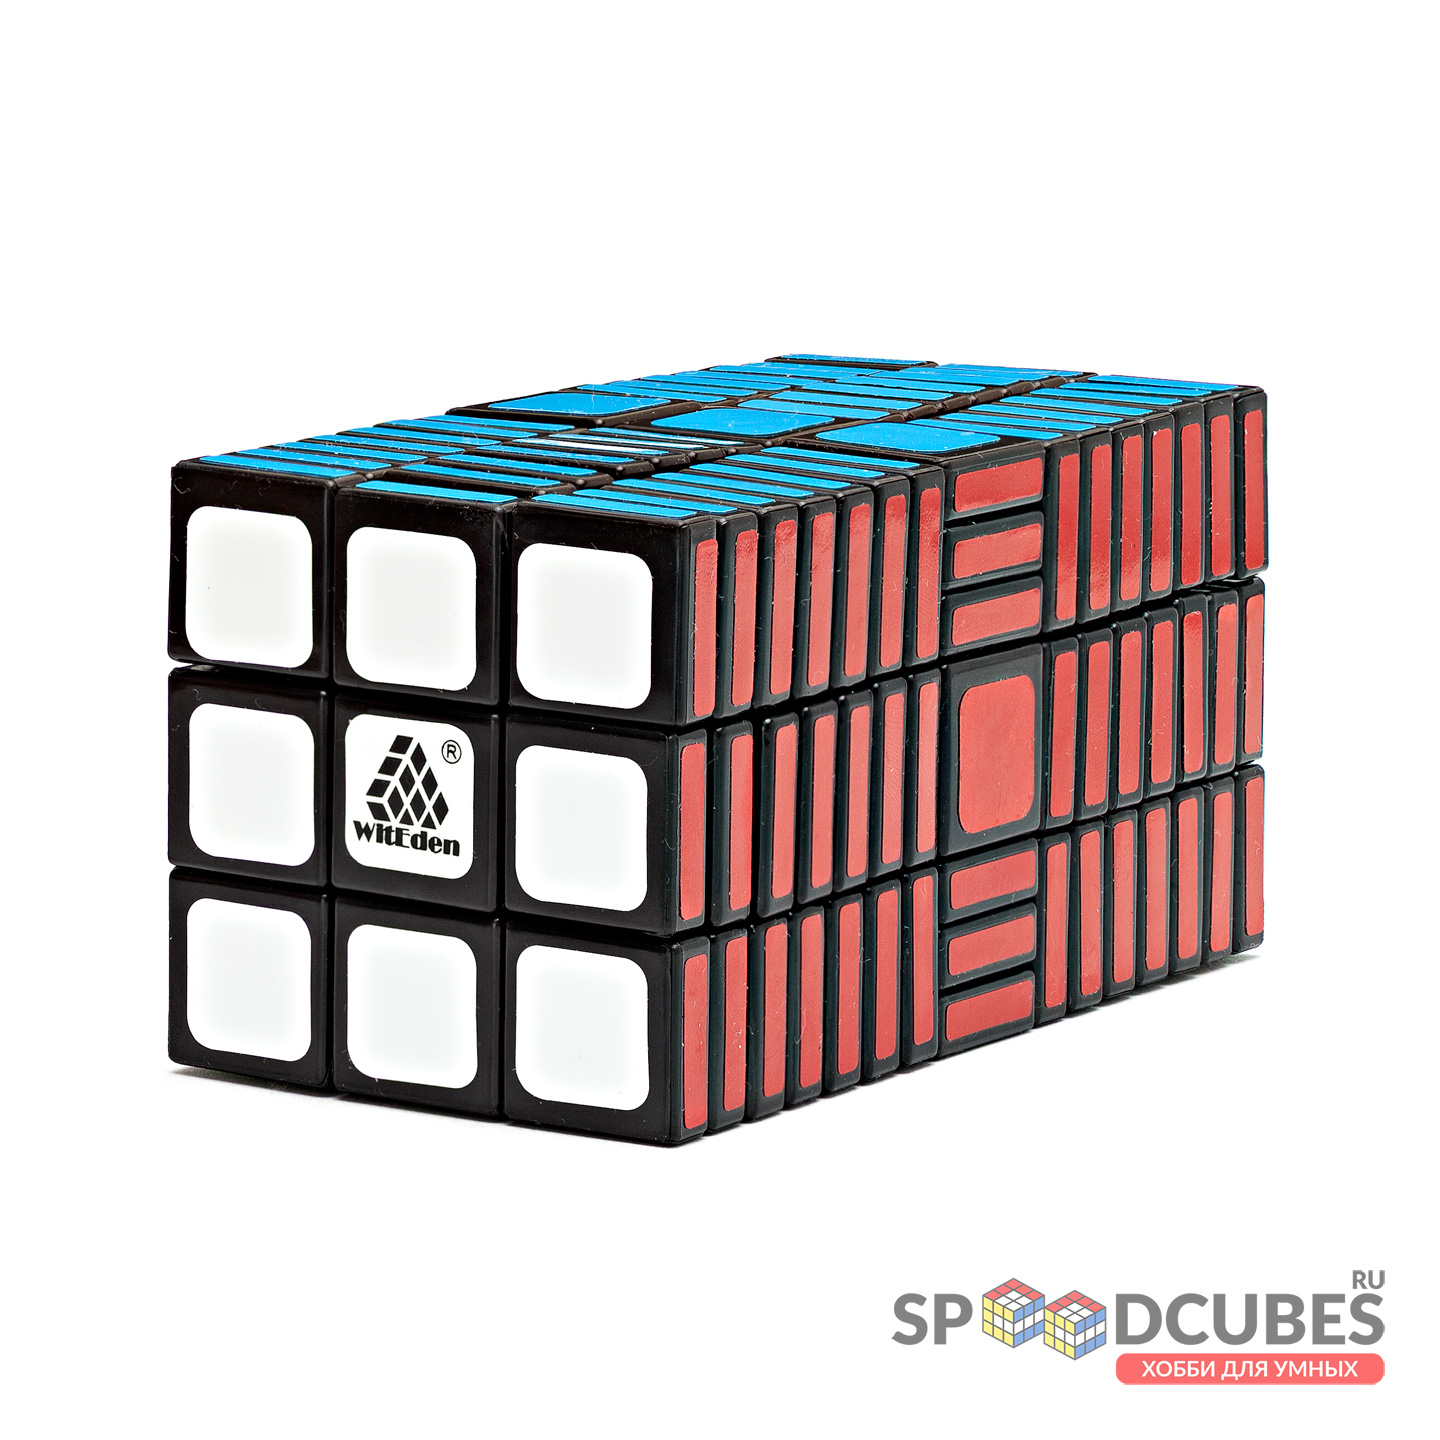 3x3x17 rubik's cube